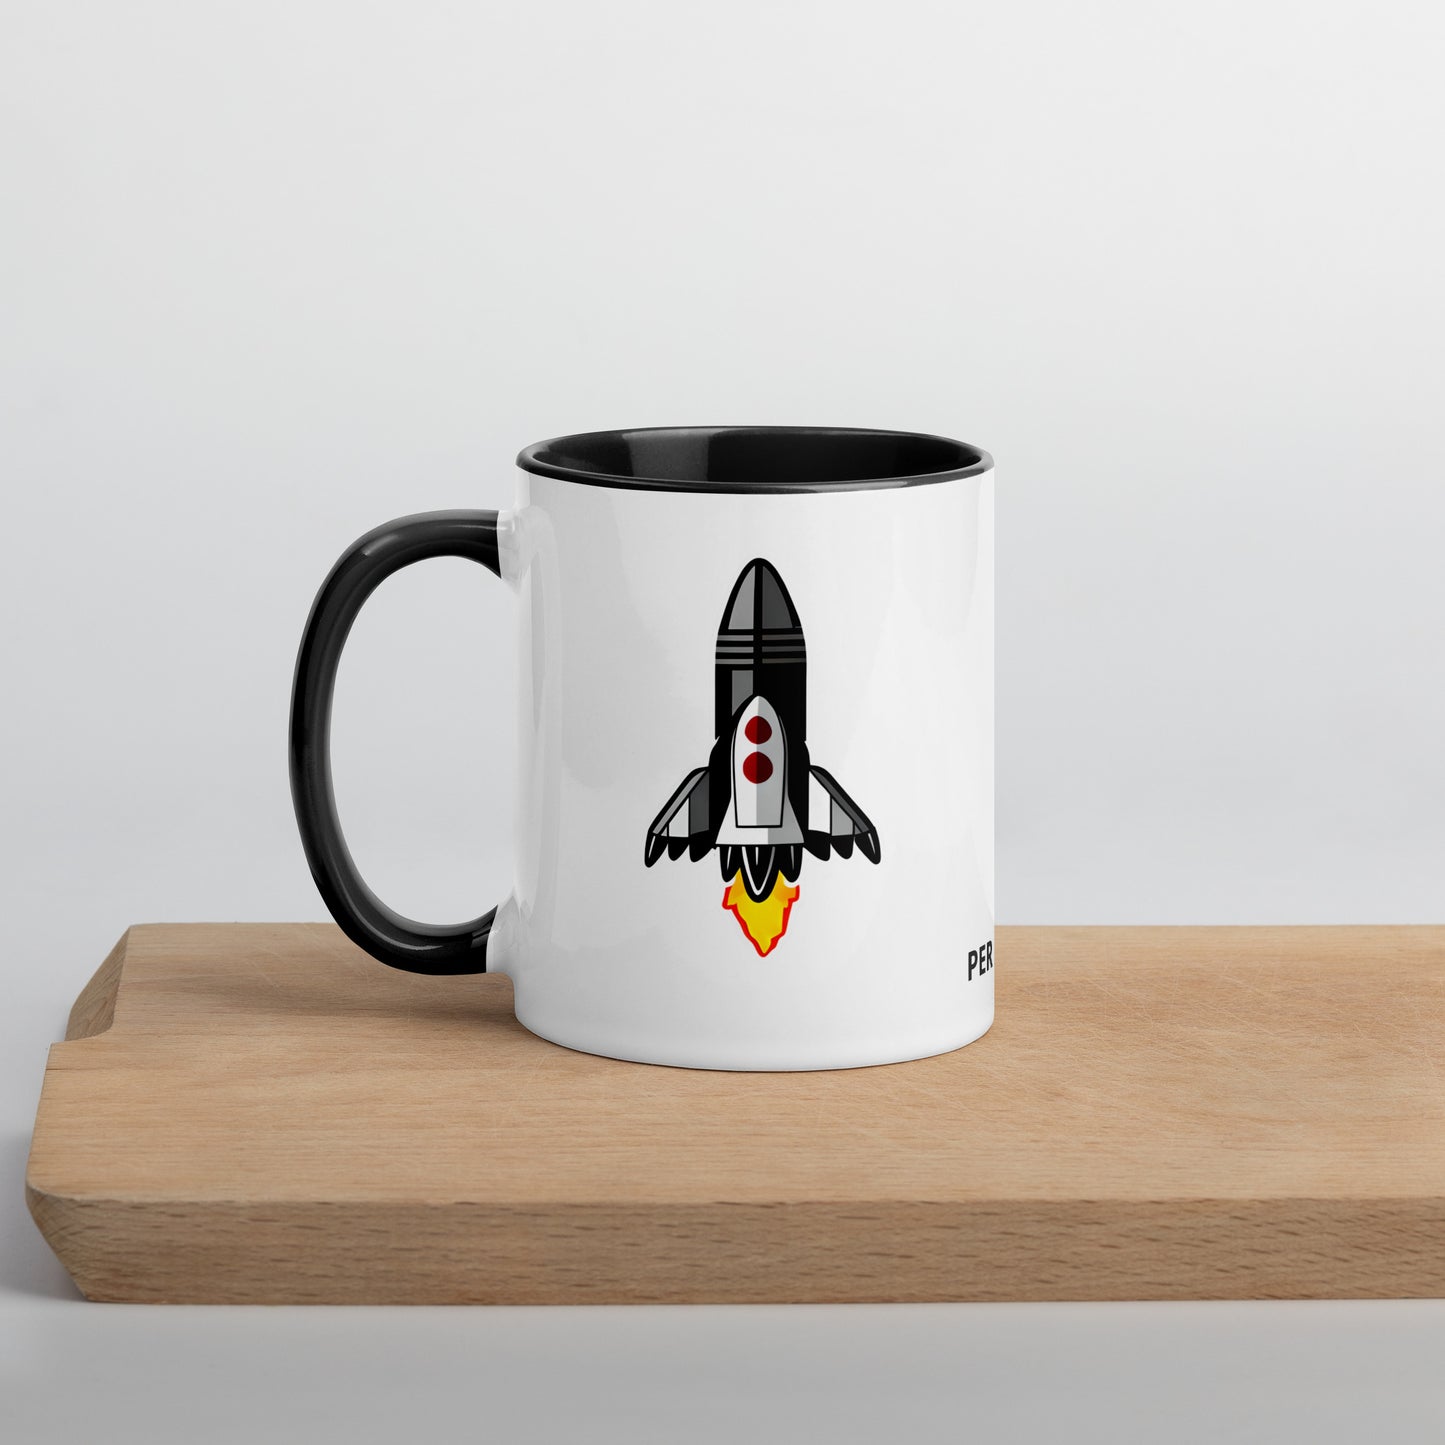 side view of coffee mug showing rocketship